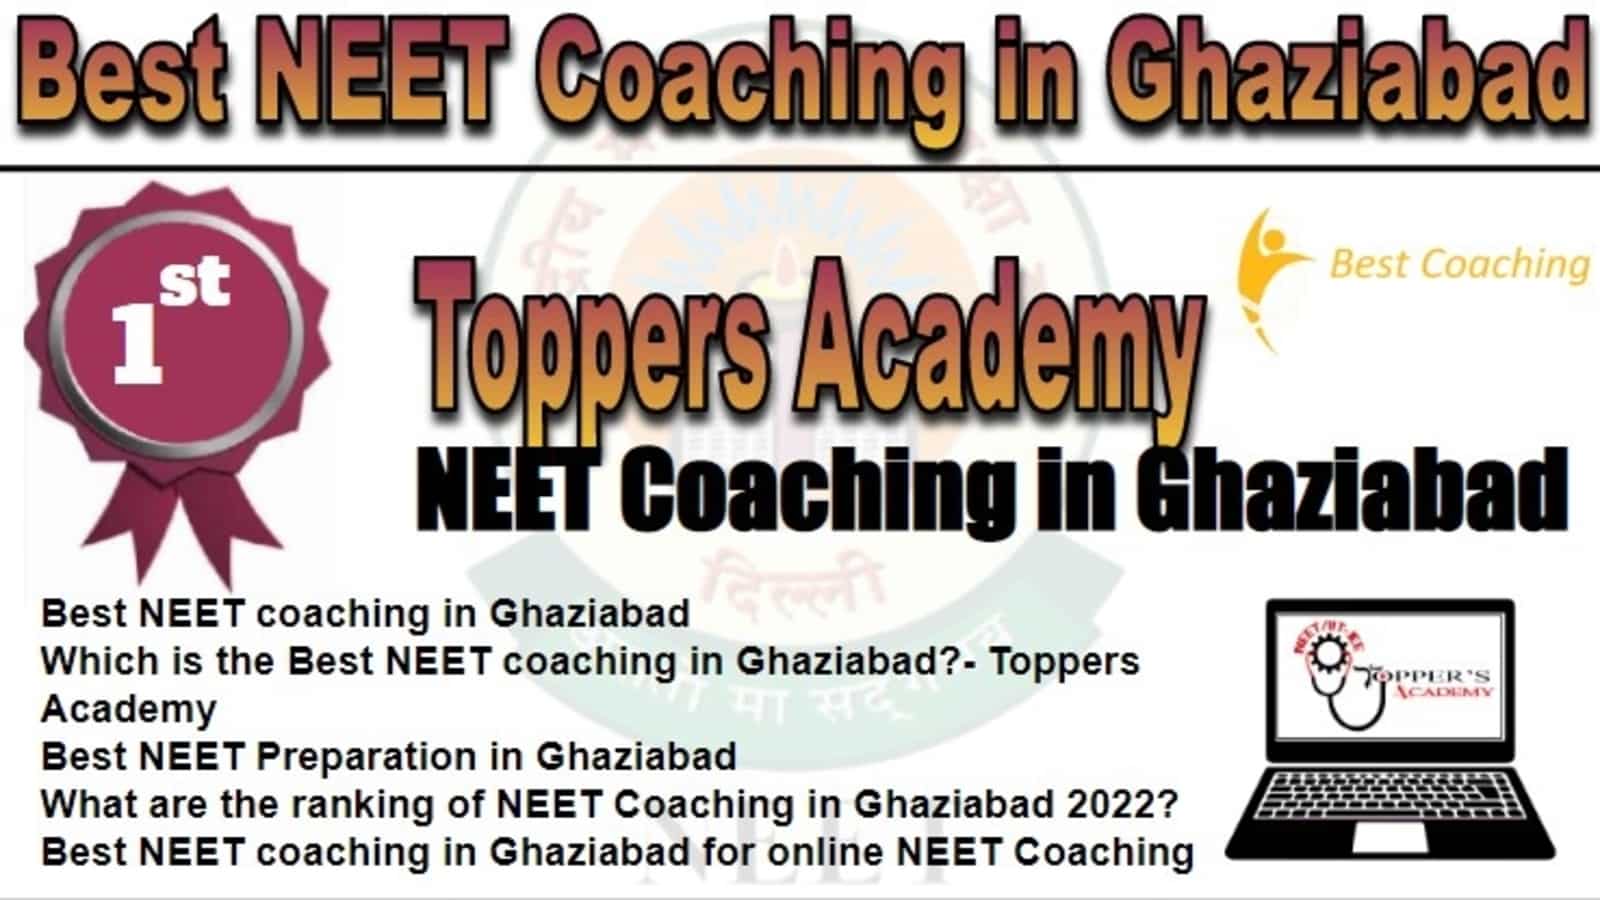 Rank 1 Best NEET Coaching in Ghaziabad